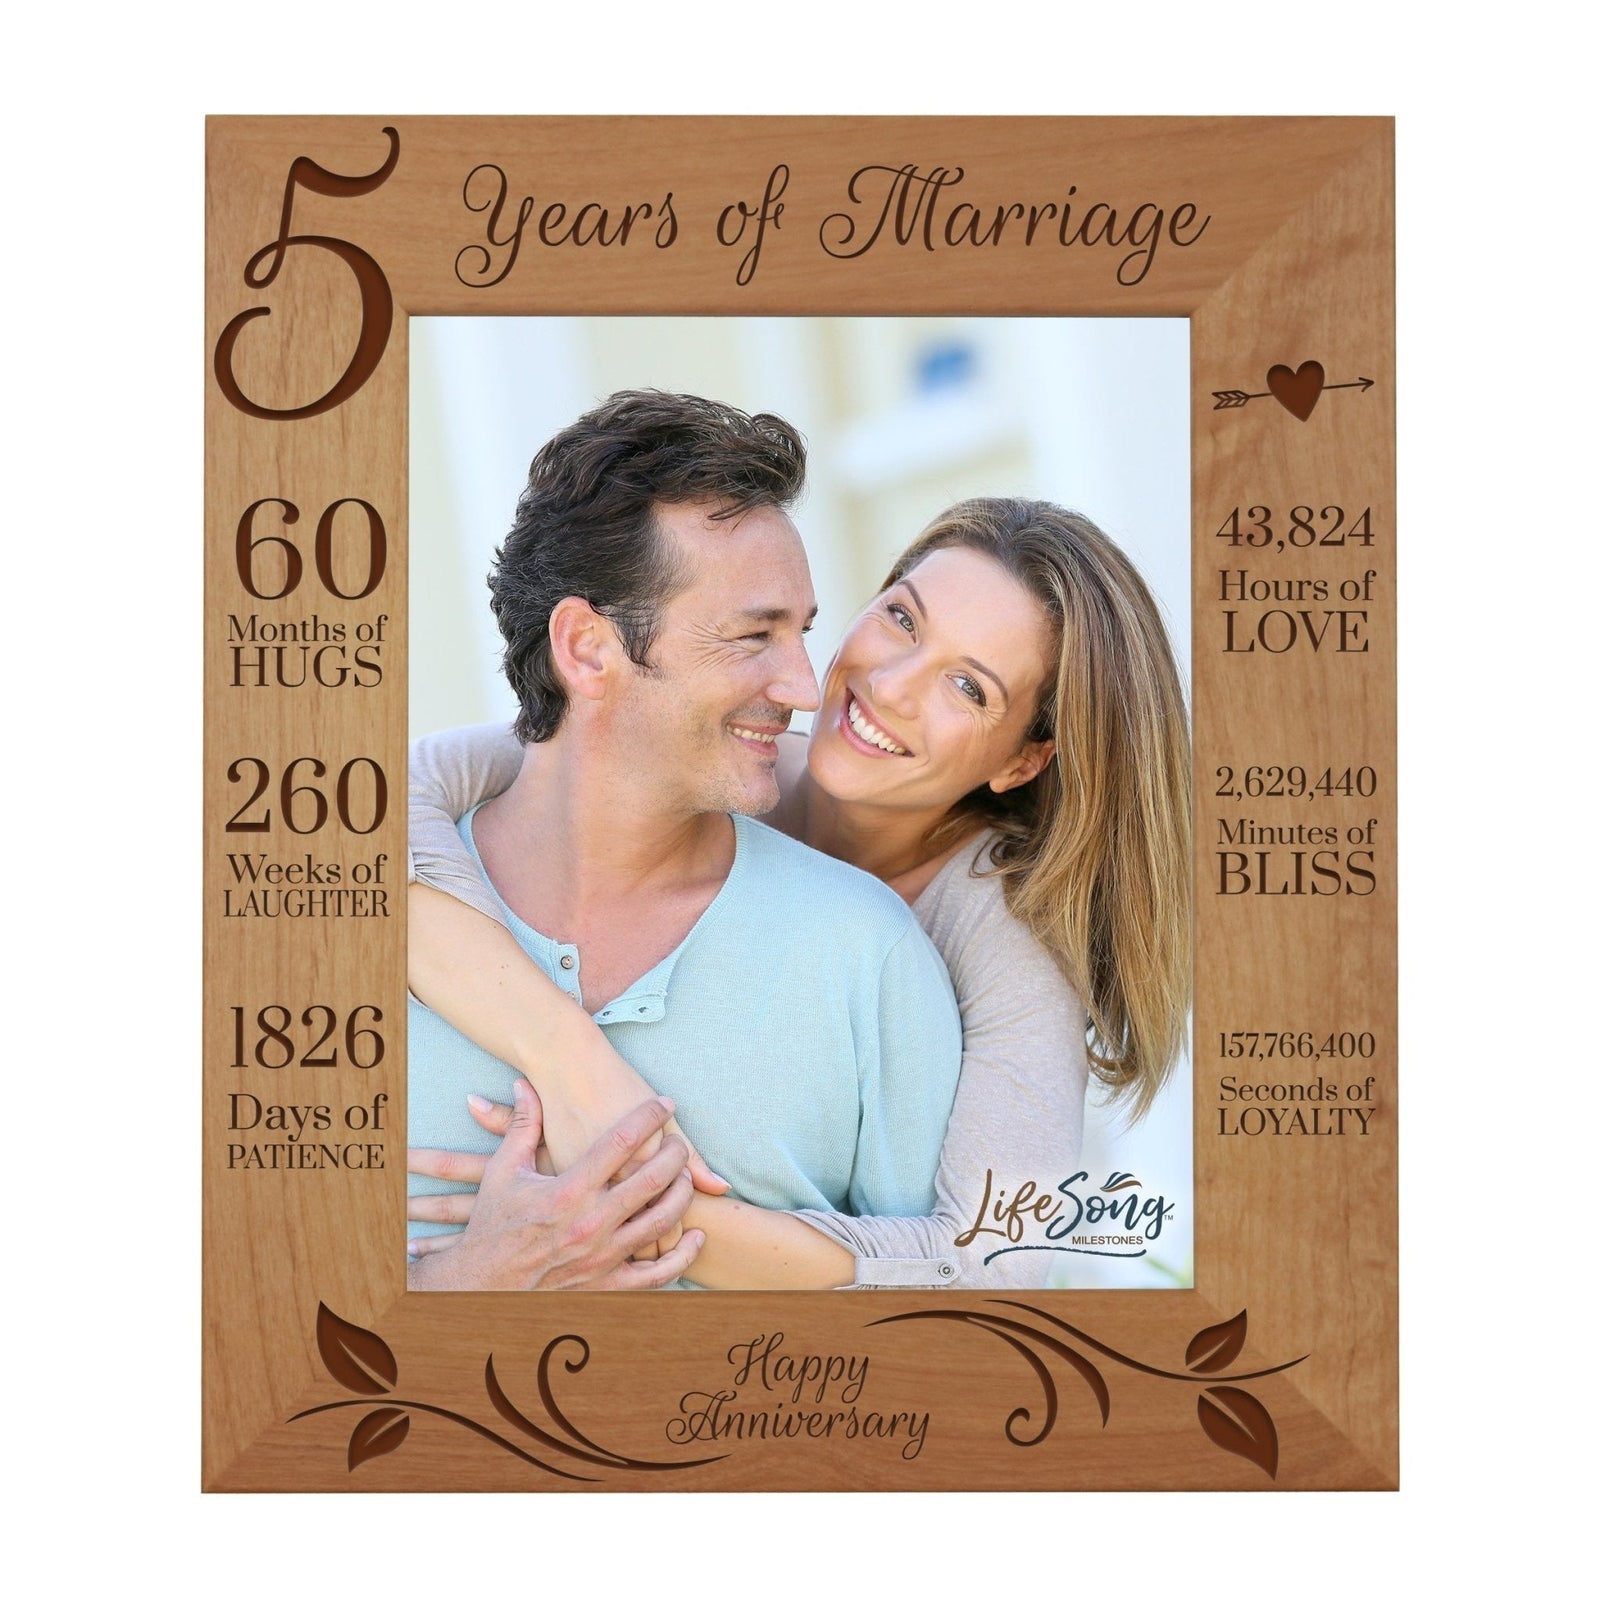 Couples 5th Wedding Anniversary Photo Frame Home Decor Gift Ideas - Happy Anniversary - LifeSong Milestones